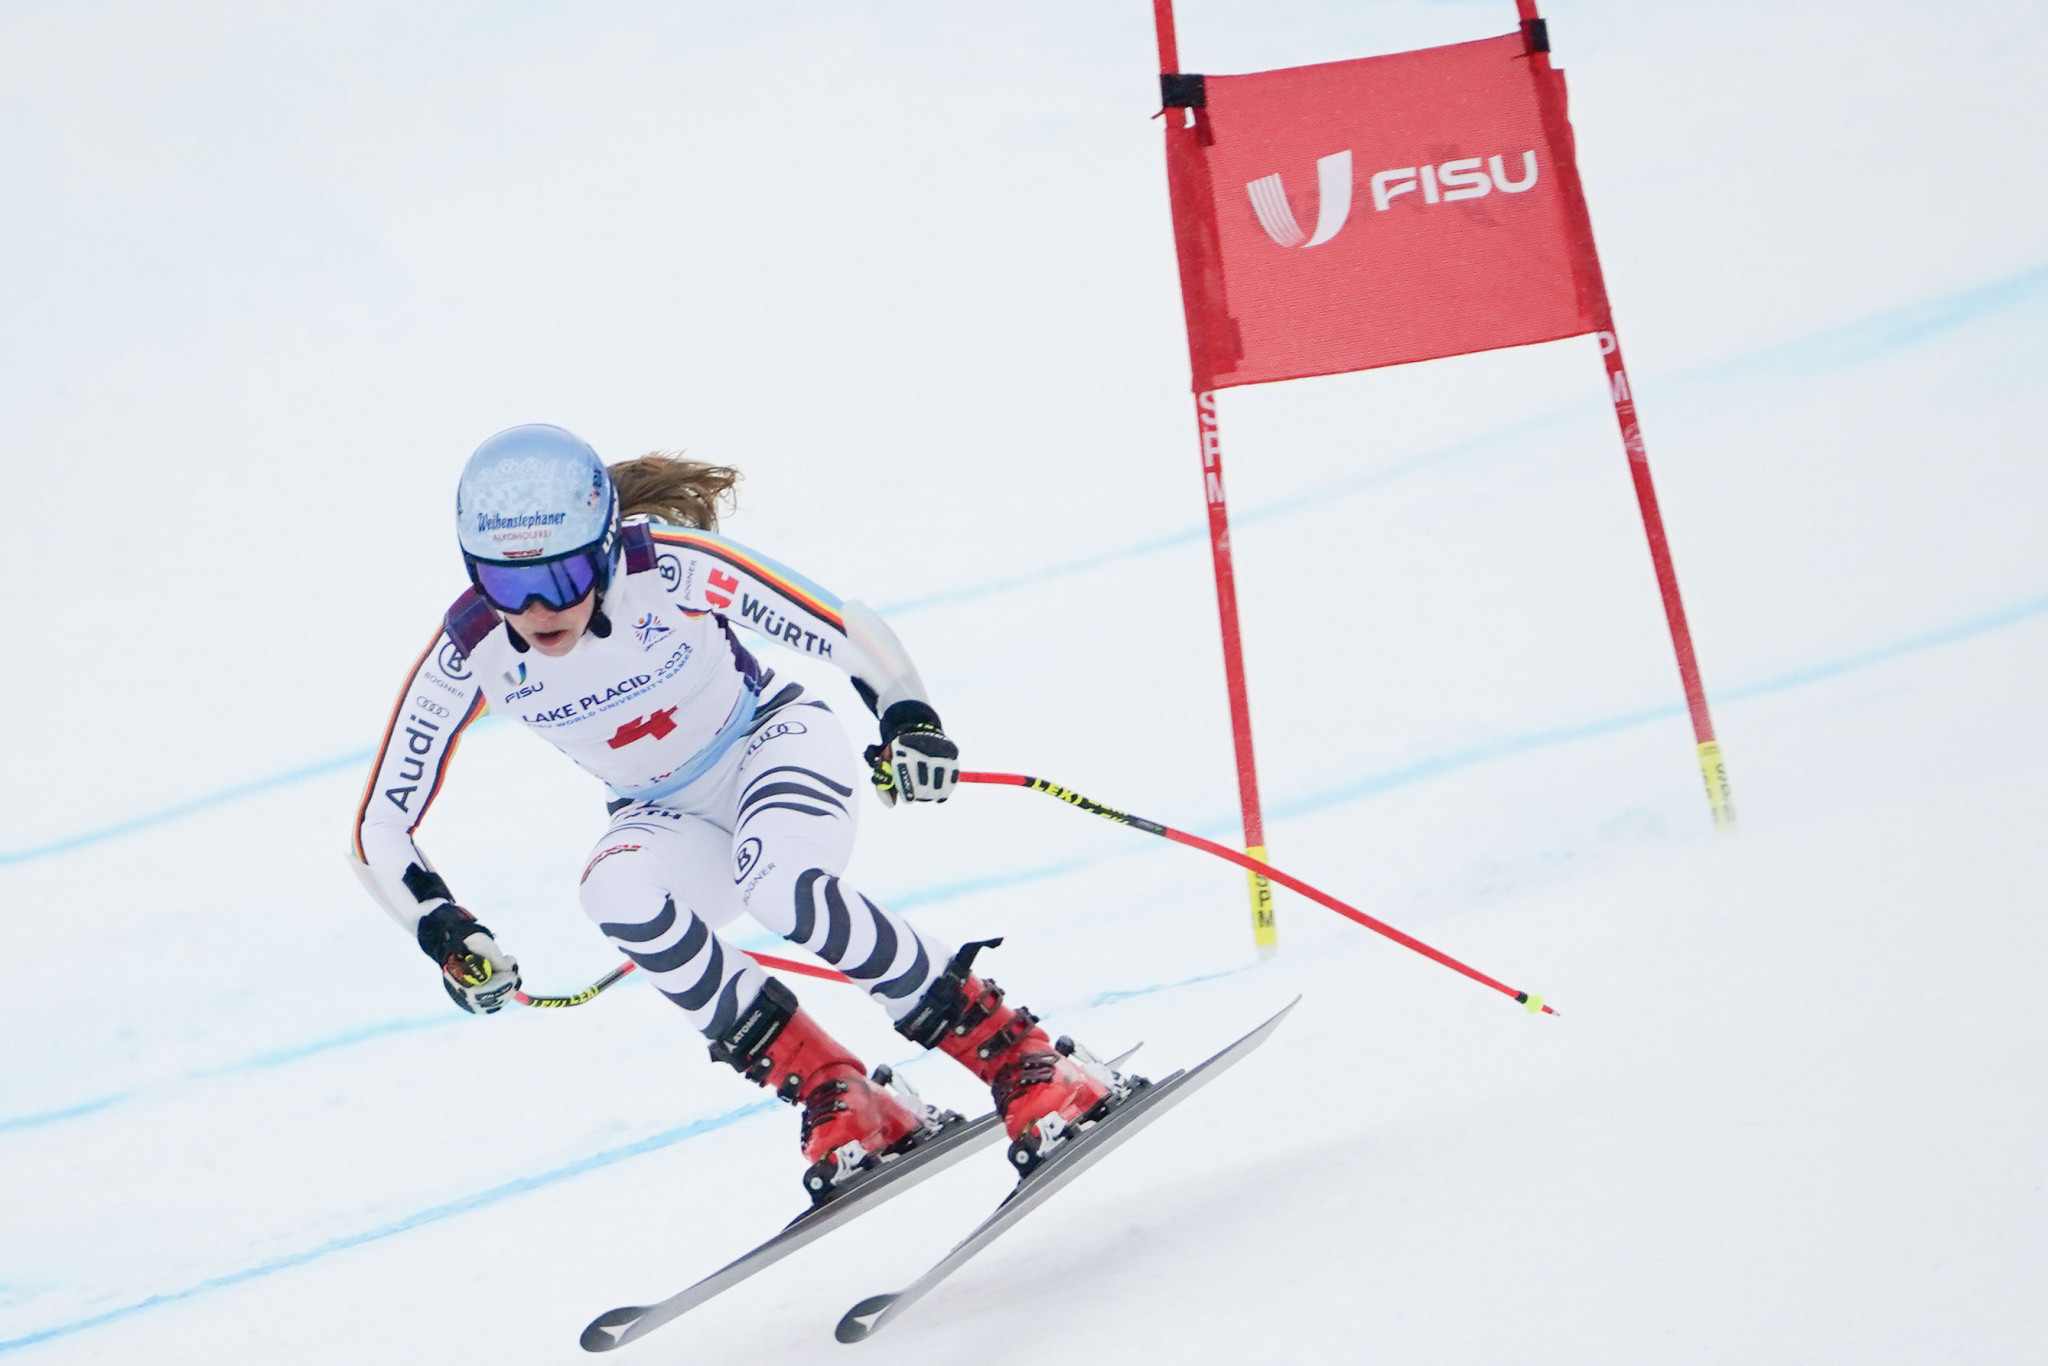 Germany's Fabiana Dorigo claimed gold in the women's Alpine skiing Super-G with a time of 52.18 ©FISU